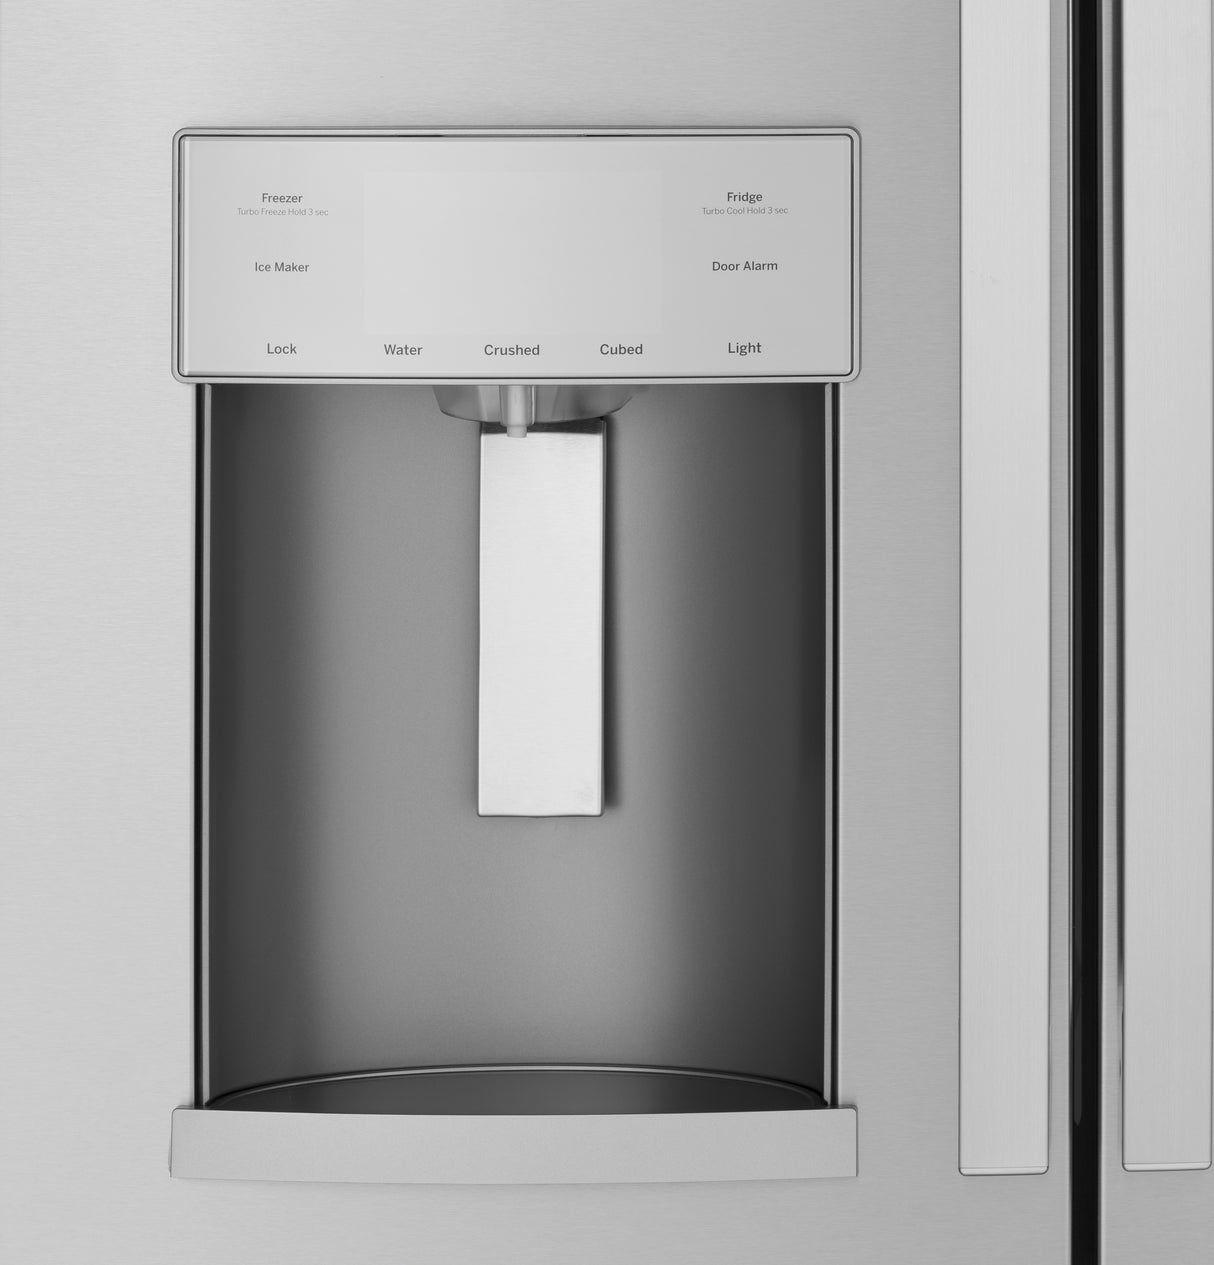 GE(R) ENERGY STAR(R) 22.1 Cu. Ft. Counter-Depth Fingerprint Resistant French-Door Refrigerator - (GYE22GYNFS)